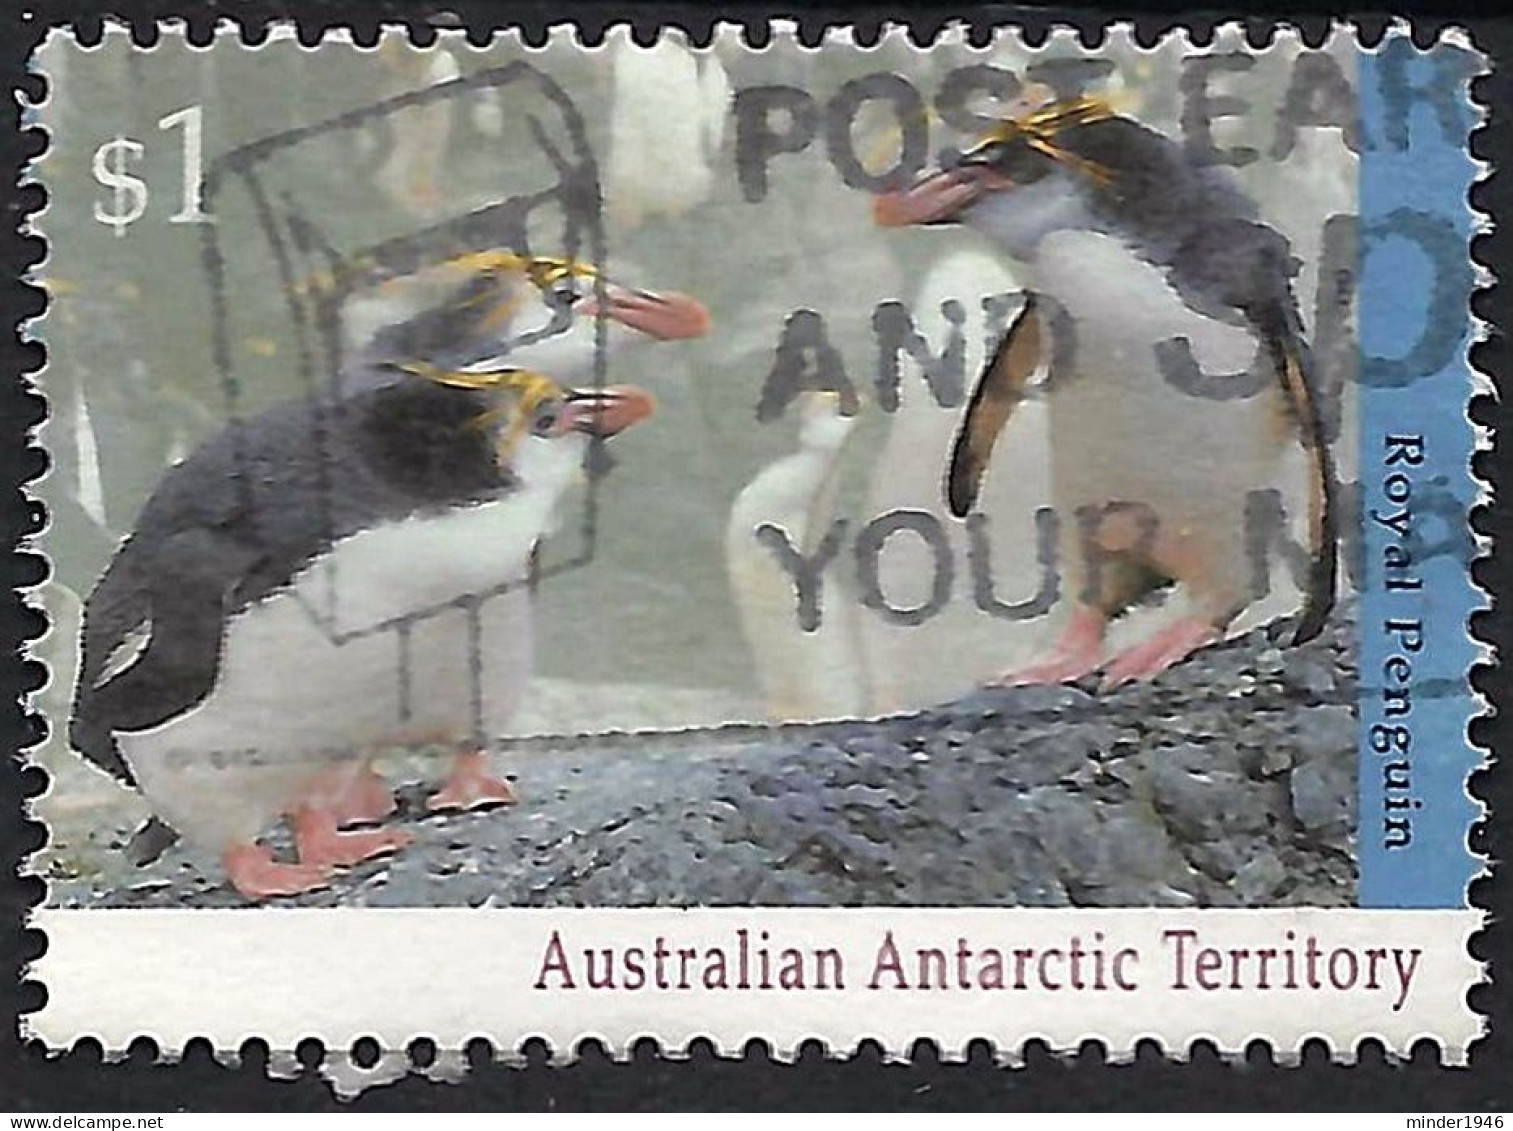 AUSTRALIAN ANTARCTIC TERRITORY (AAT) 1992 QEII $1 Multicoloured, Wildlife-Royal Penguin SG94 Used - Usati